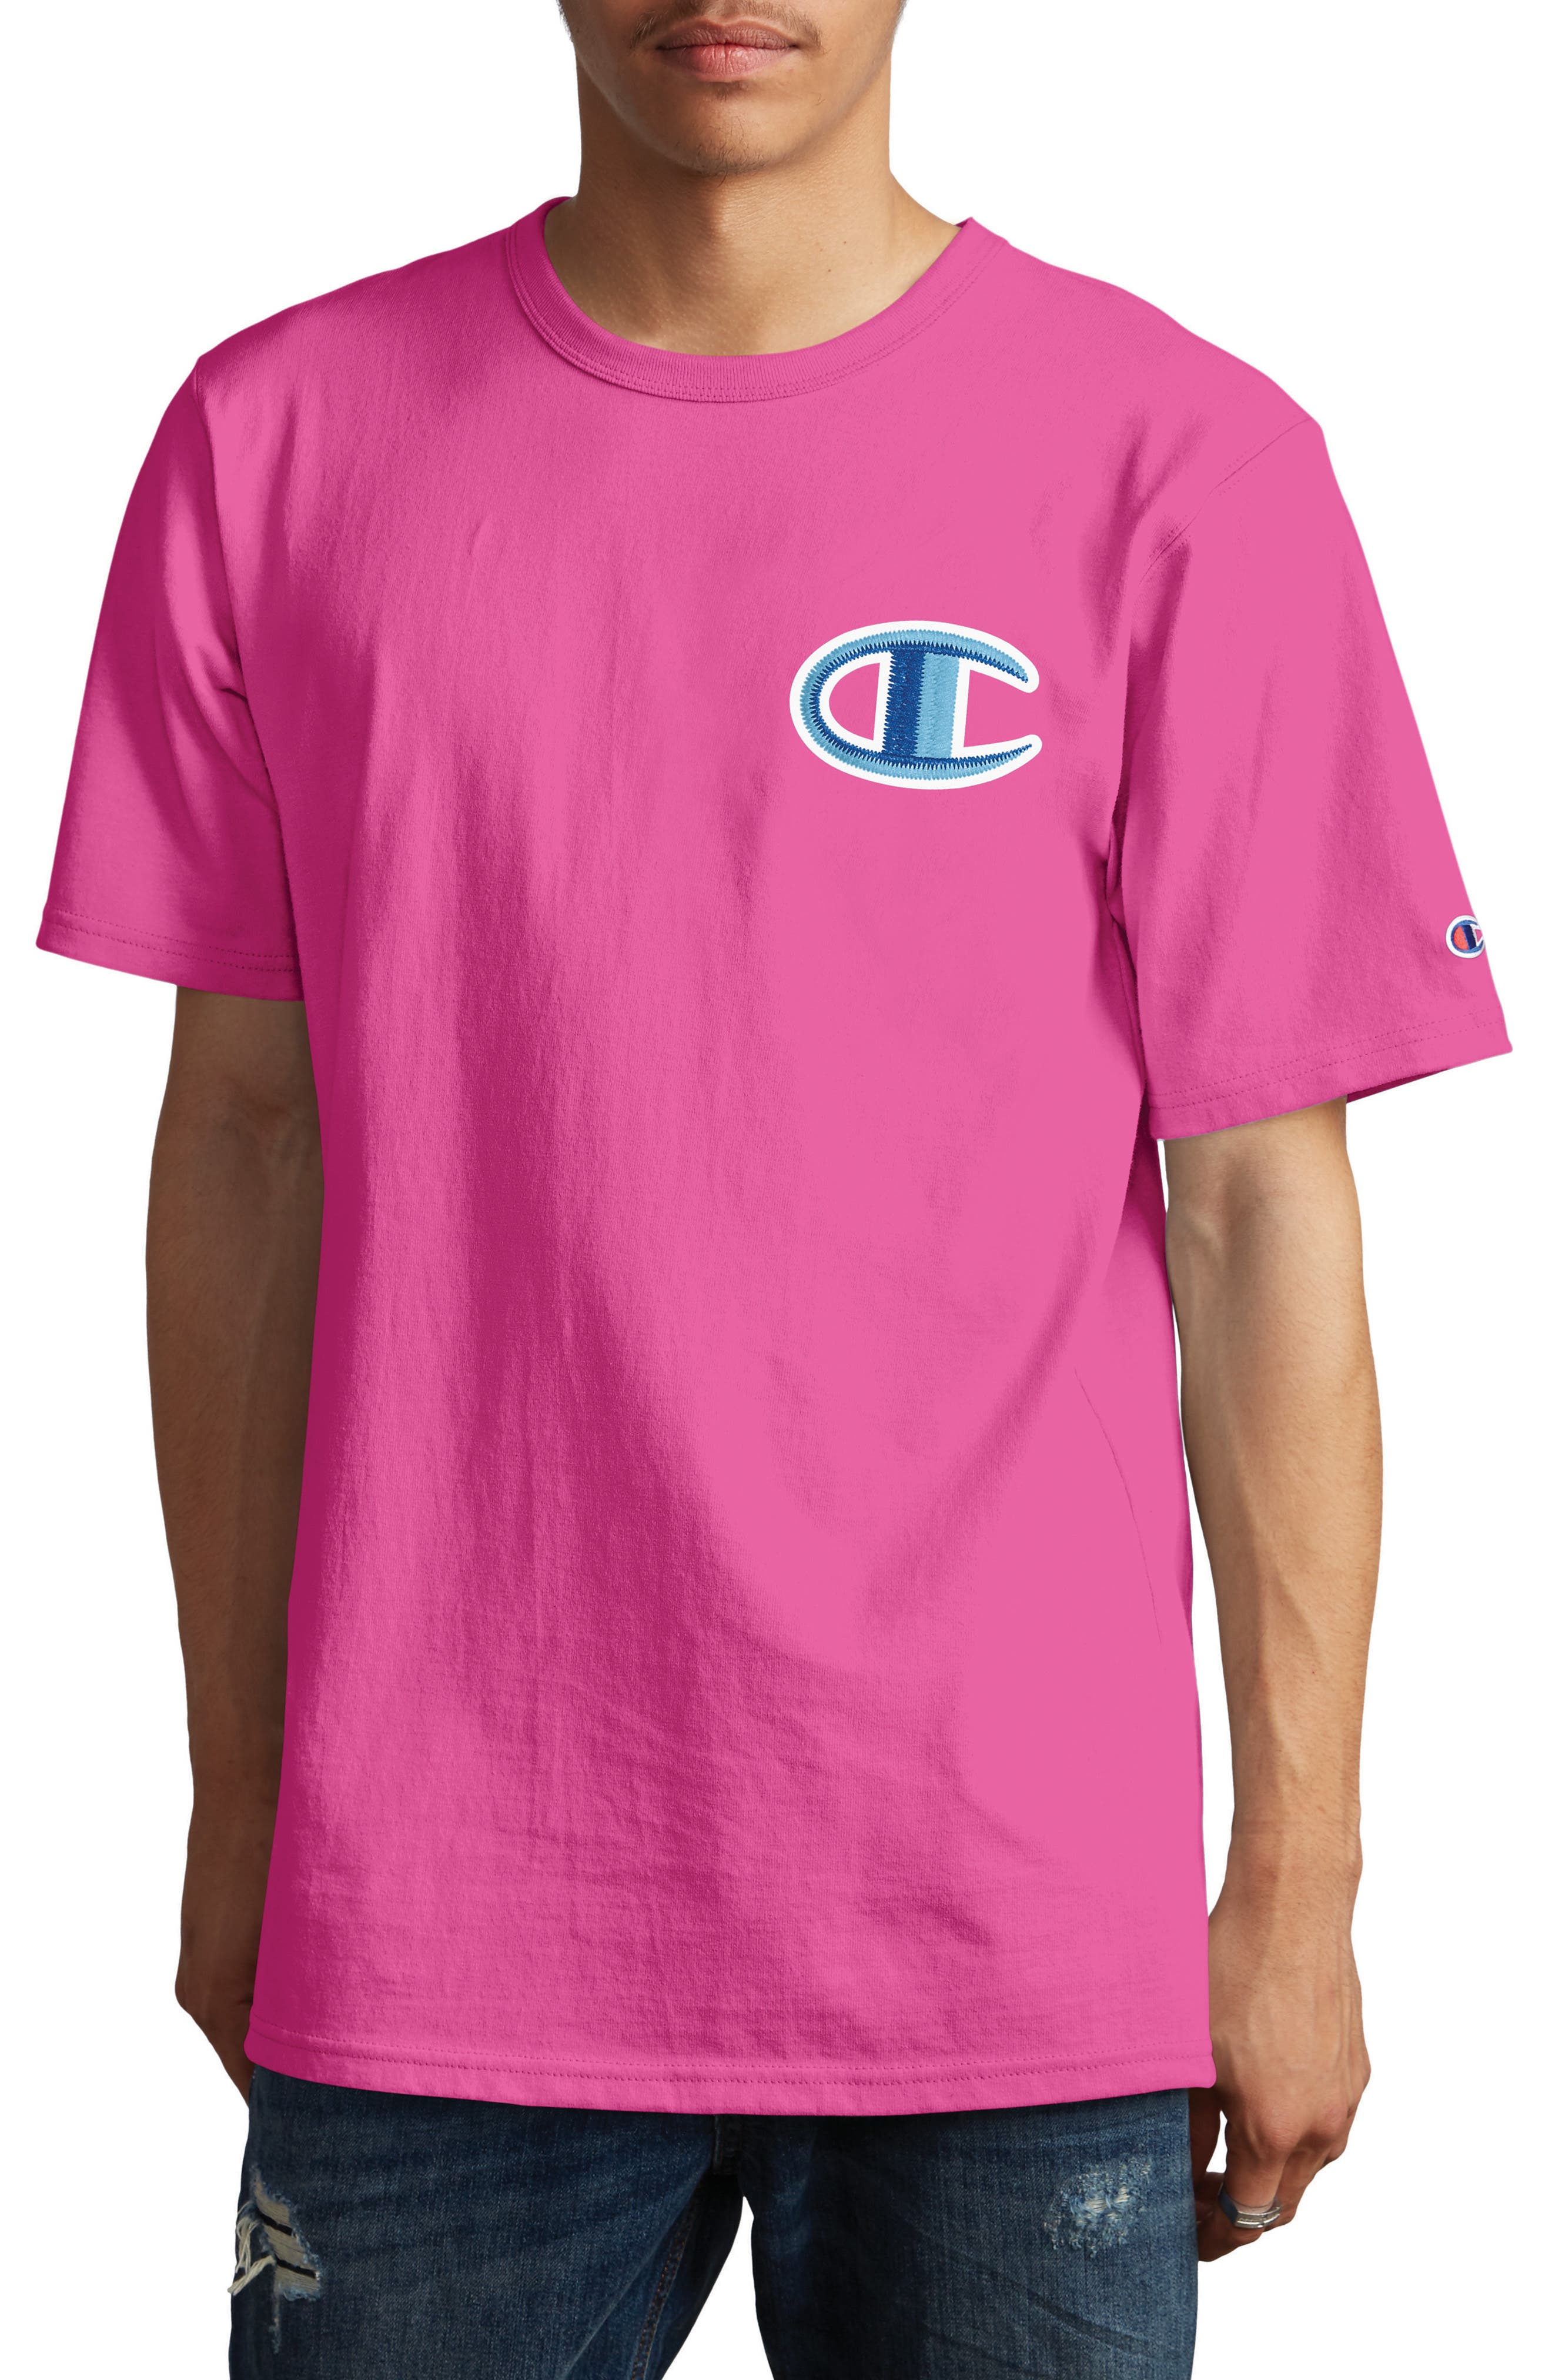 pink athletic shirt